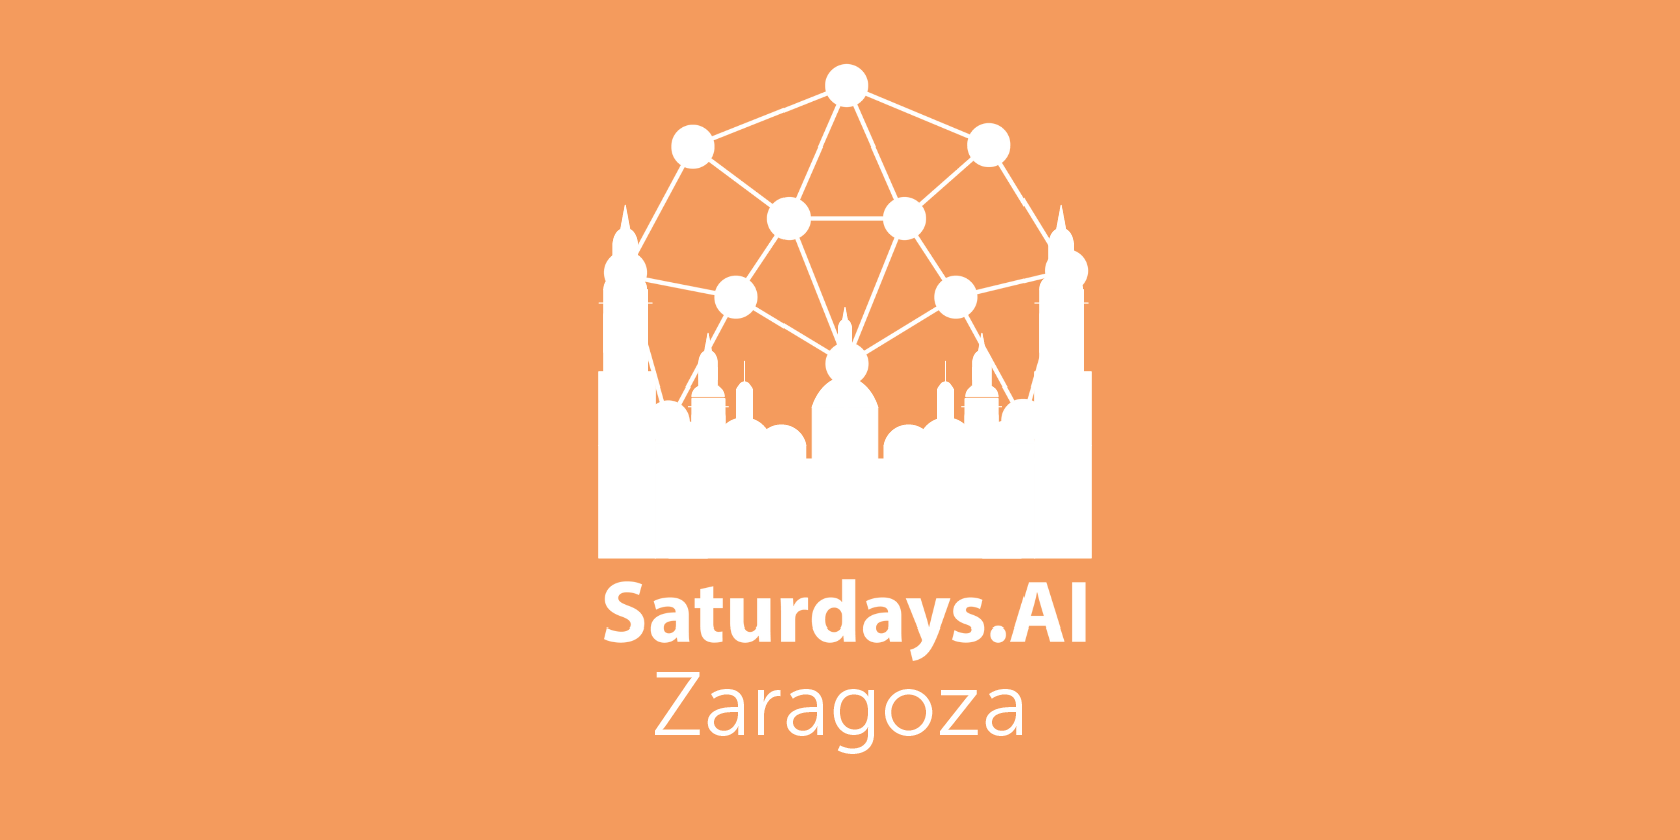 Saturdays AI Zaragoza